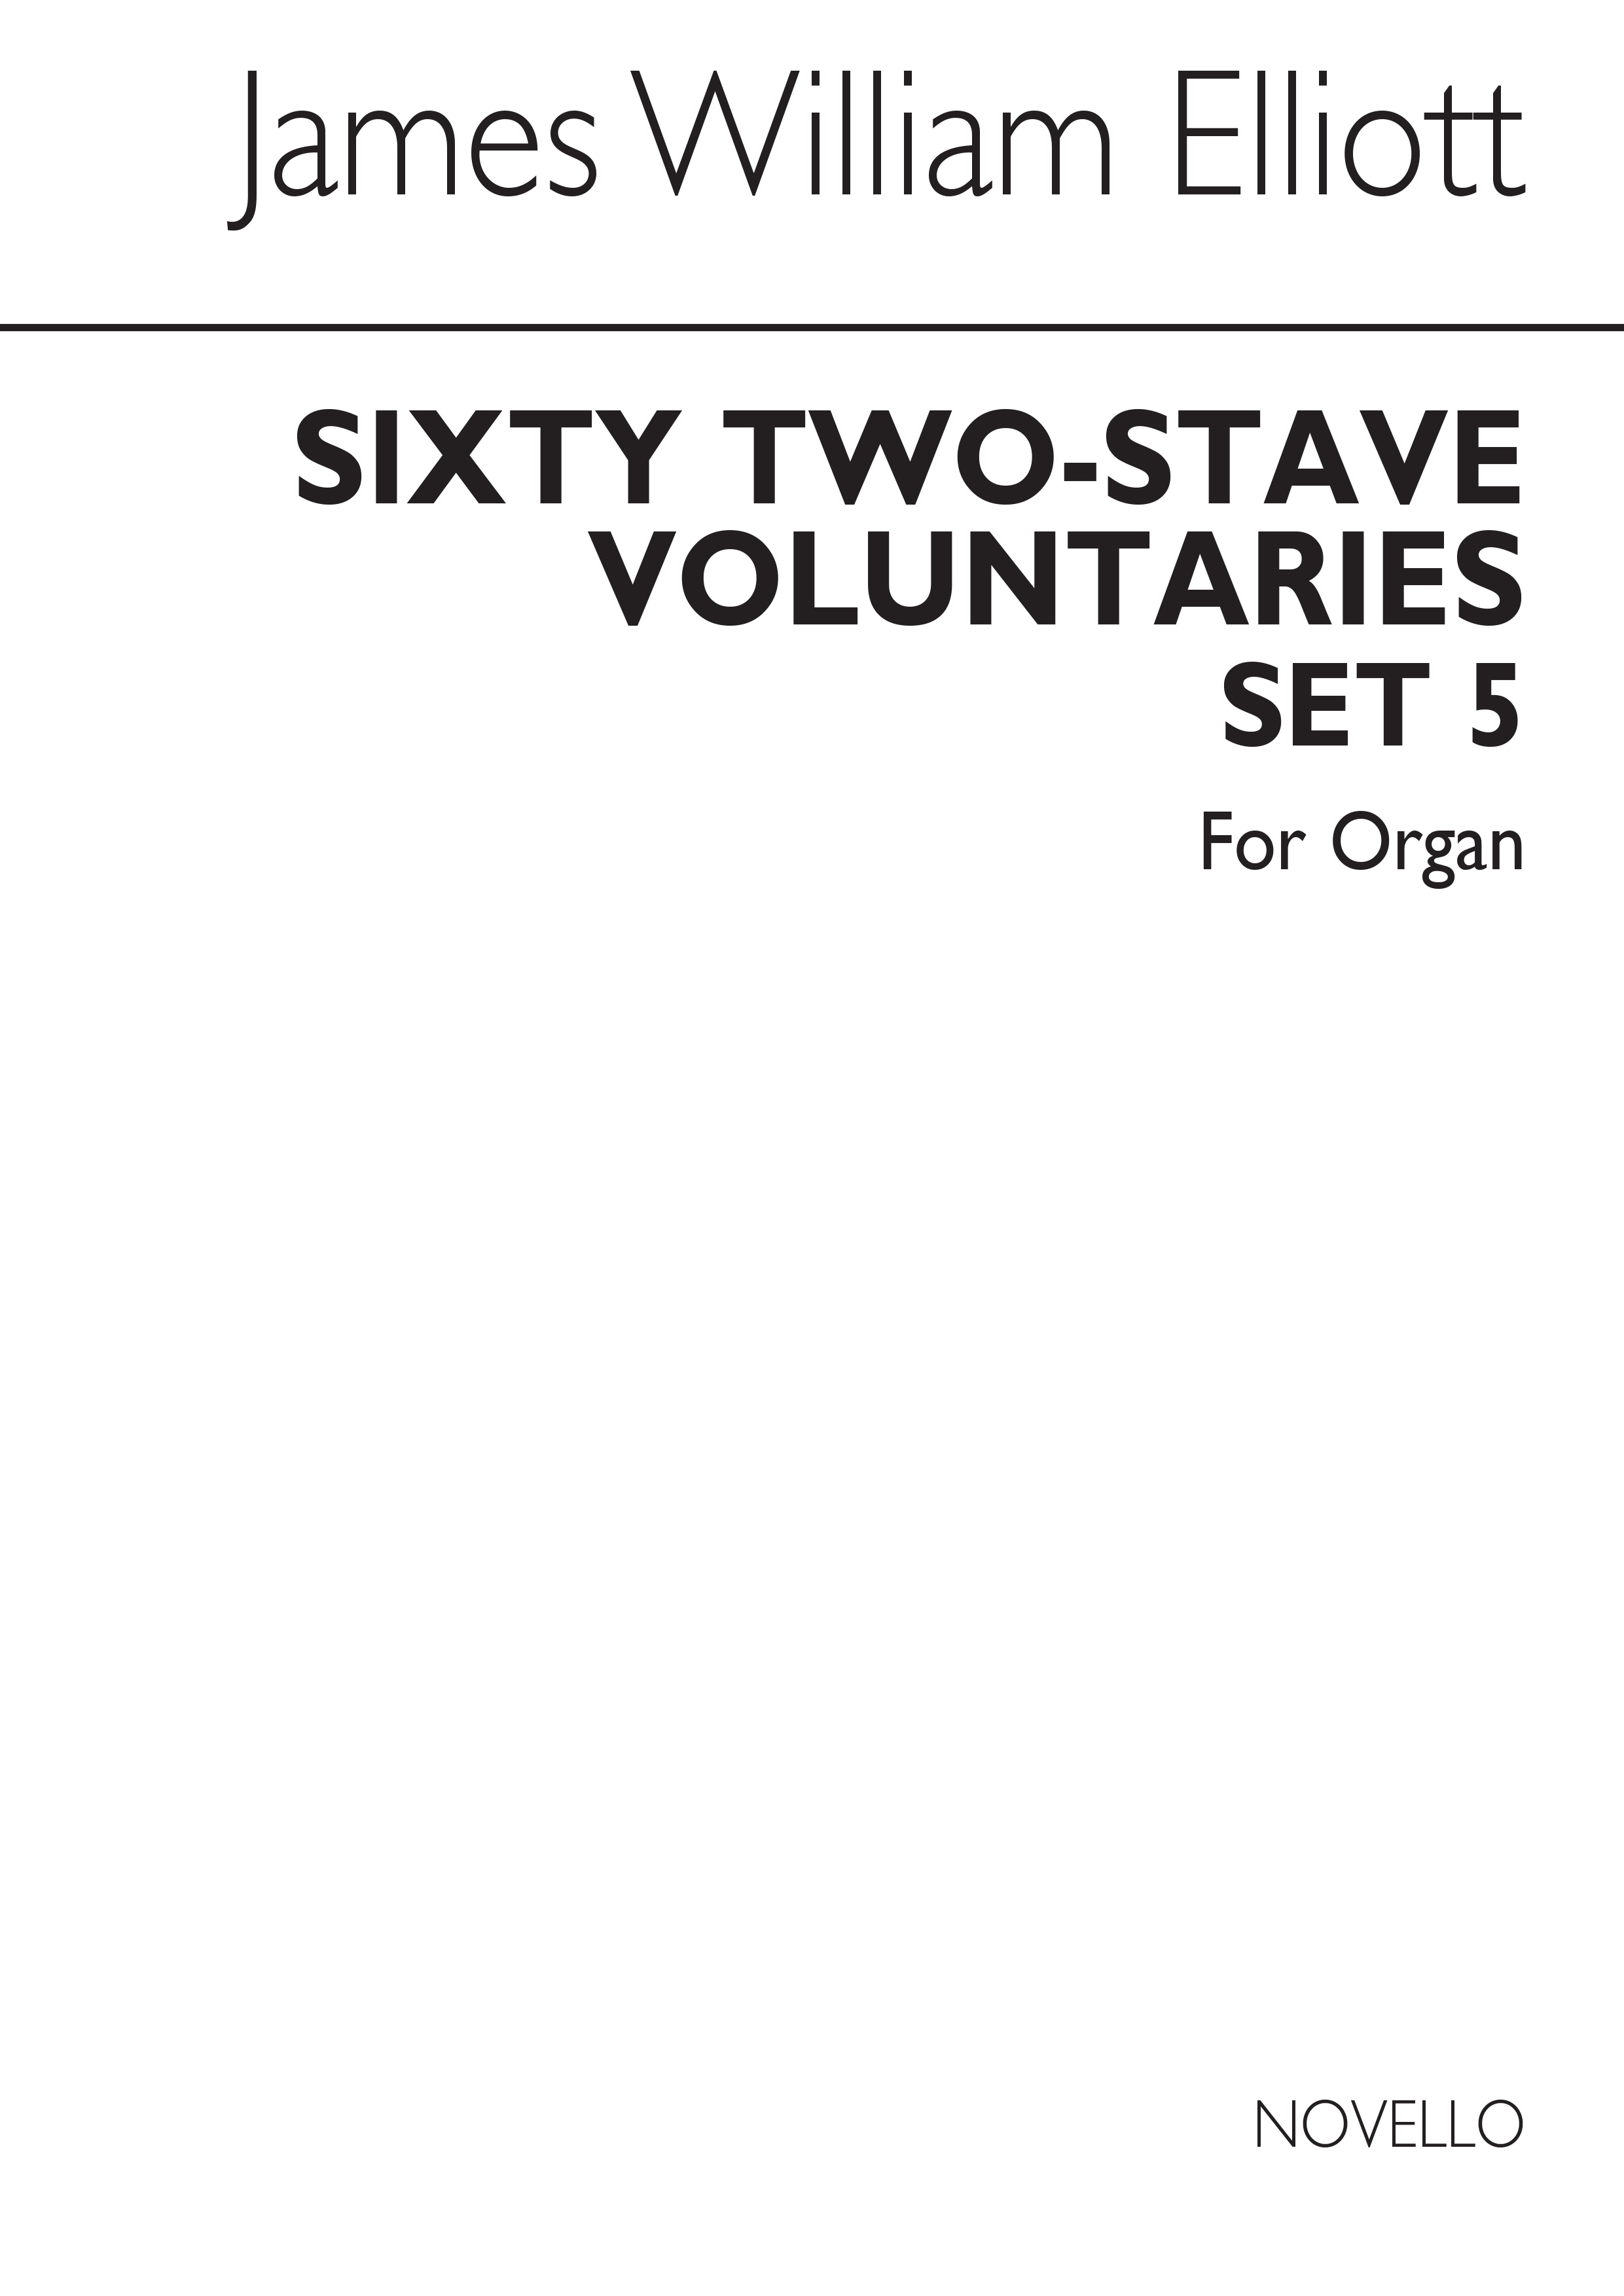 James W. Elliott: Sixty 2-Stave Voluntaries For Harmonium Set 5: Organ: